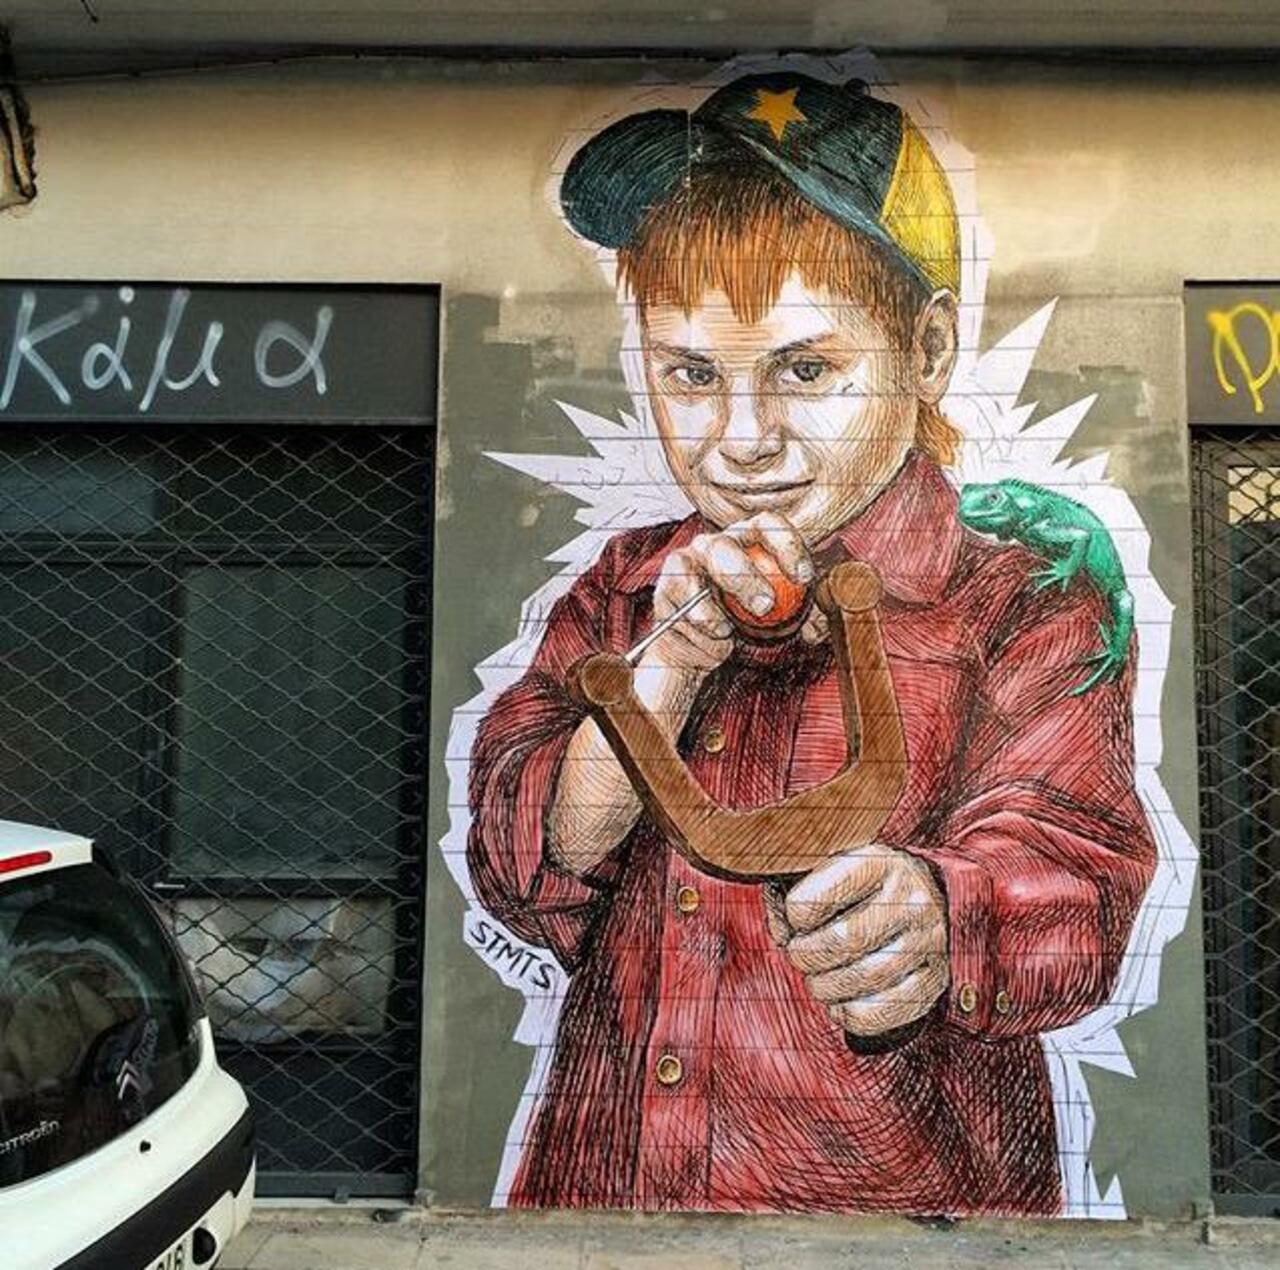 Street Art by STMTS in Athens

#art #graffiti #mural #streetart http://t.co/b4NHxJBlFf